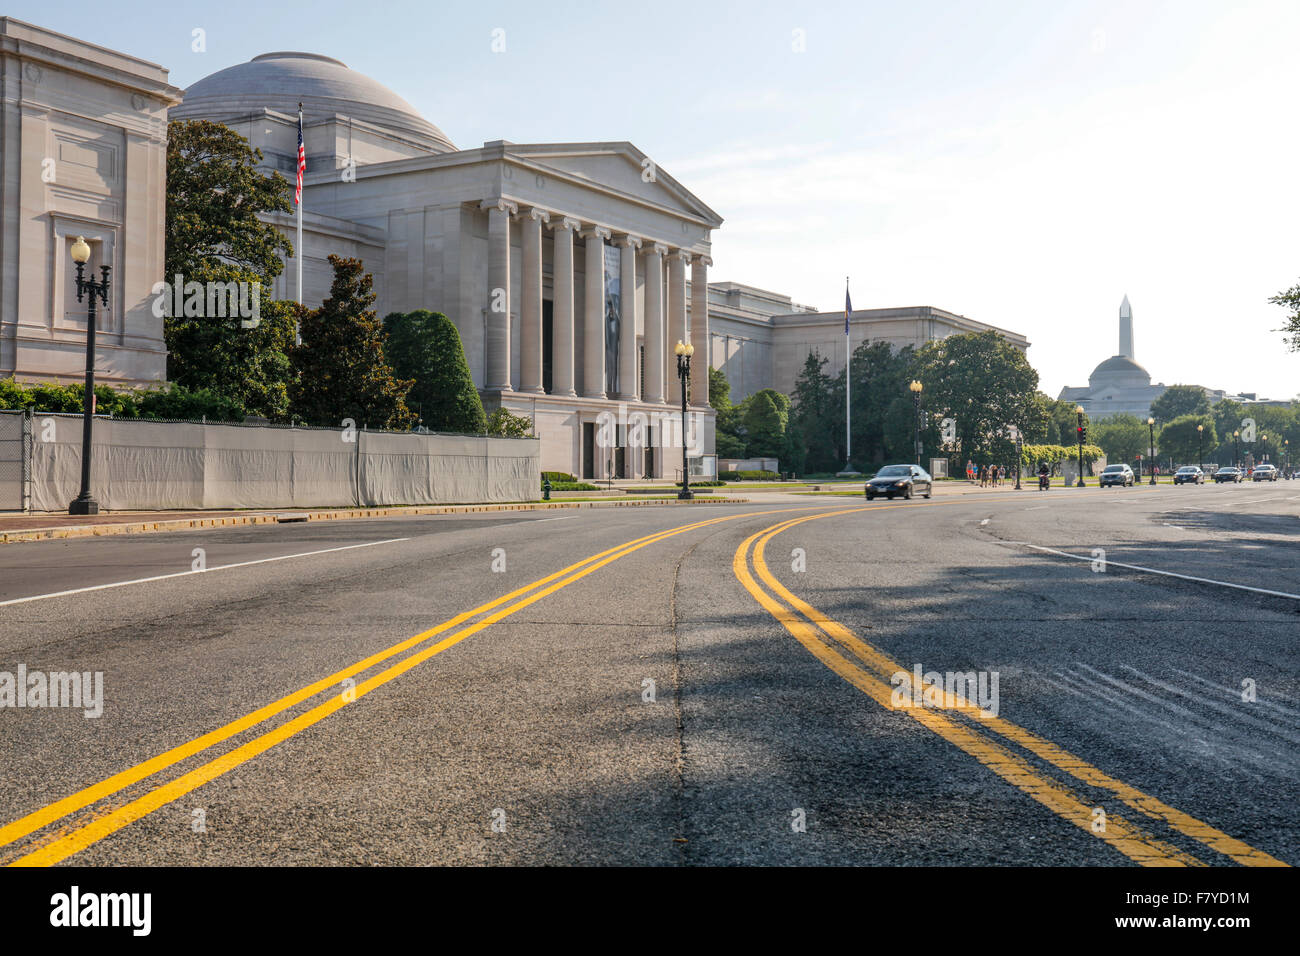 National Gallery of Art, National Mall, Washington, D.C., United States Stock Photo